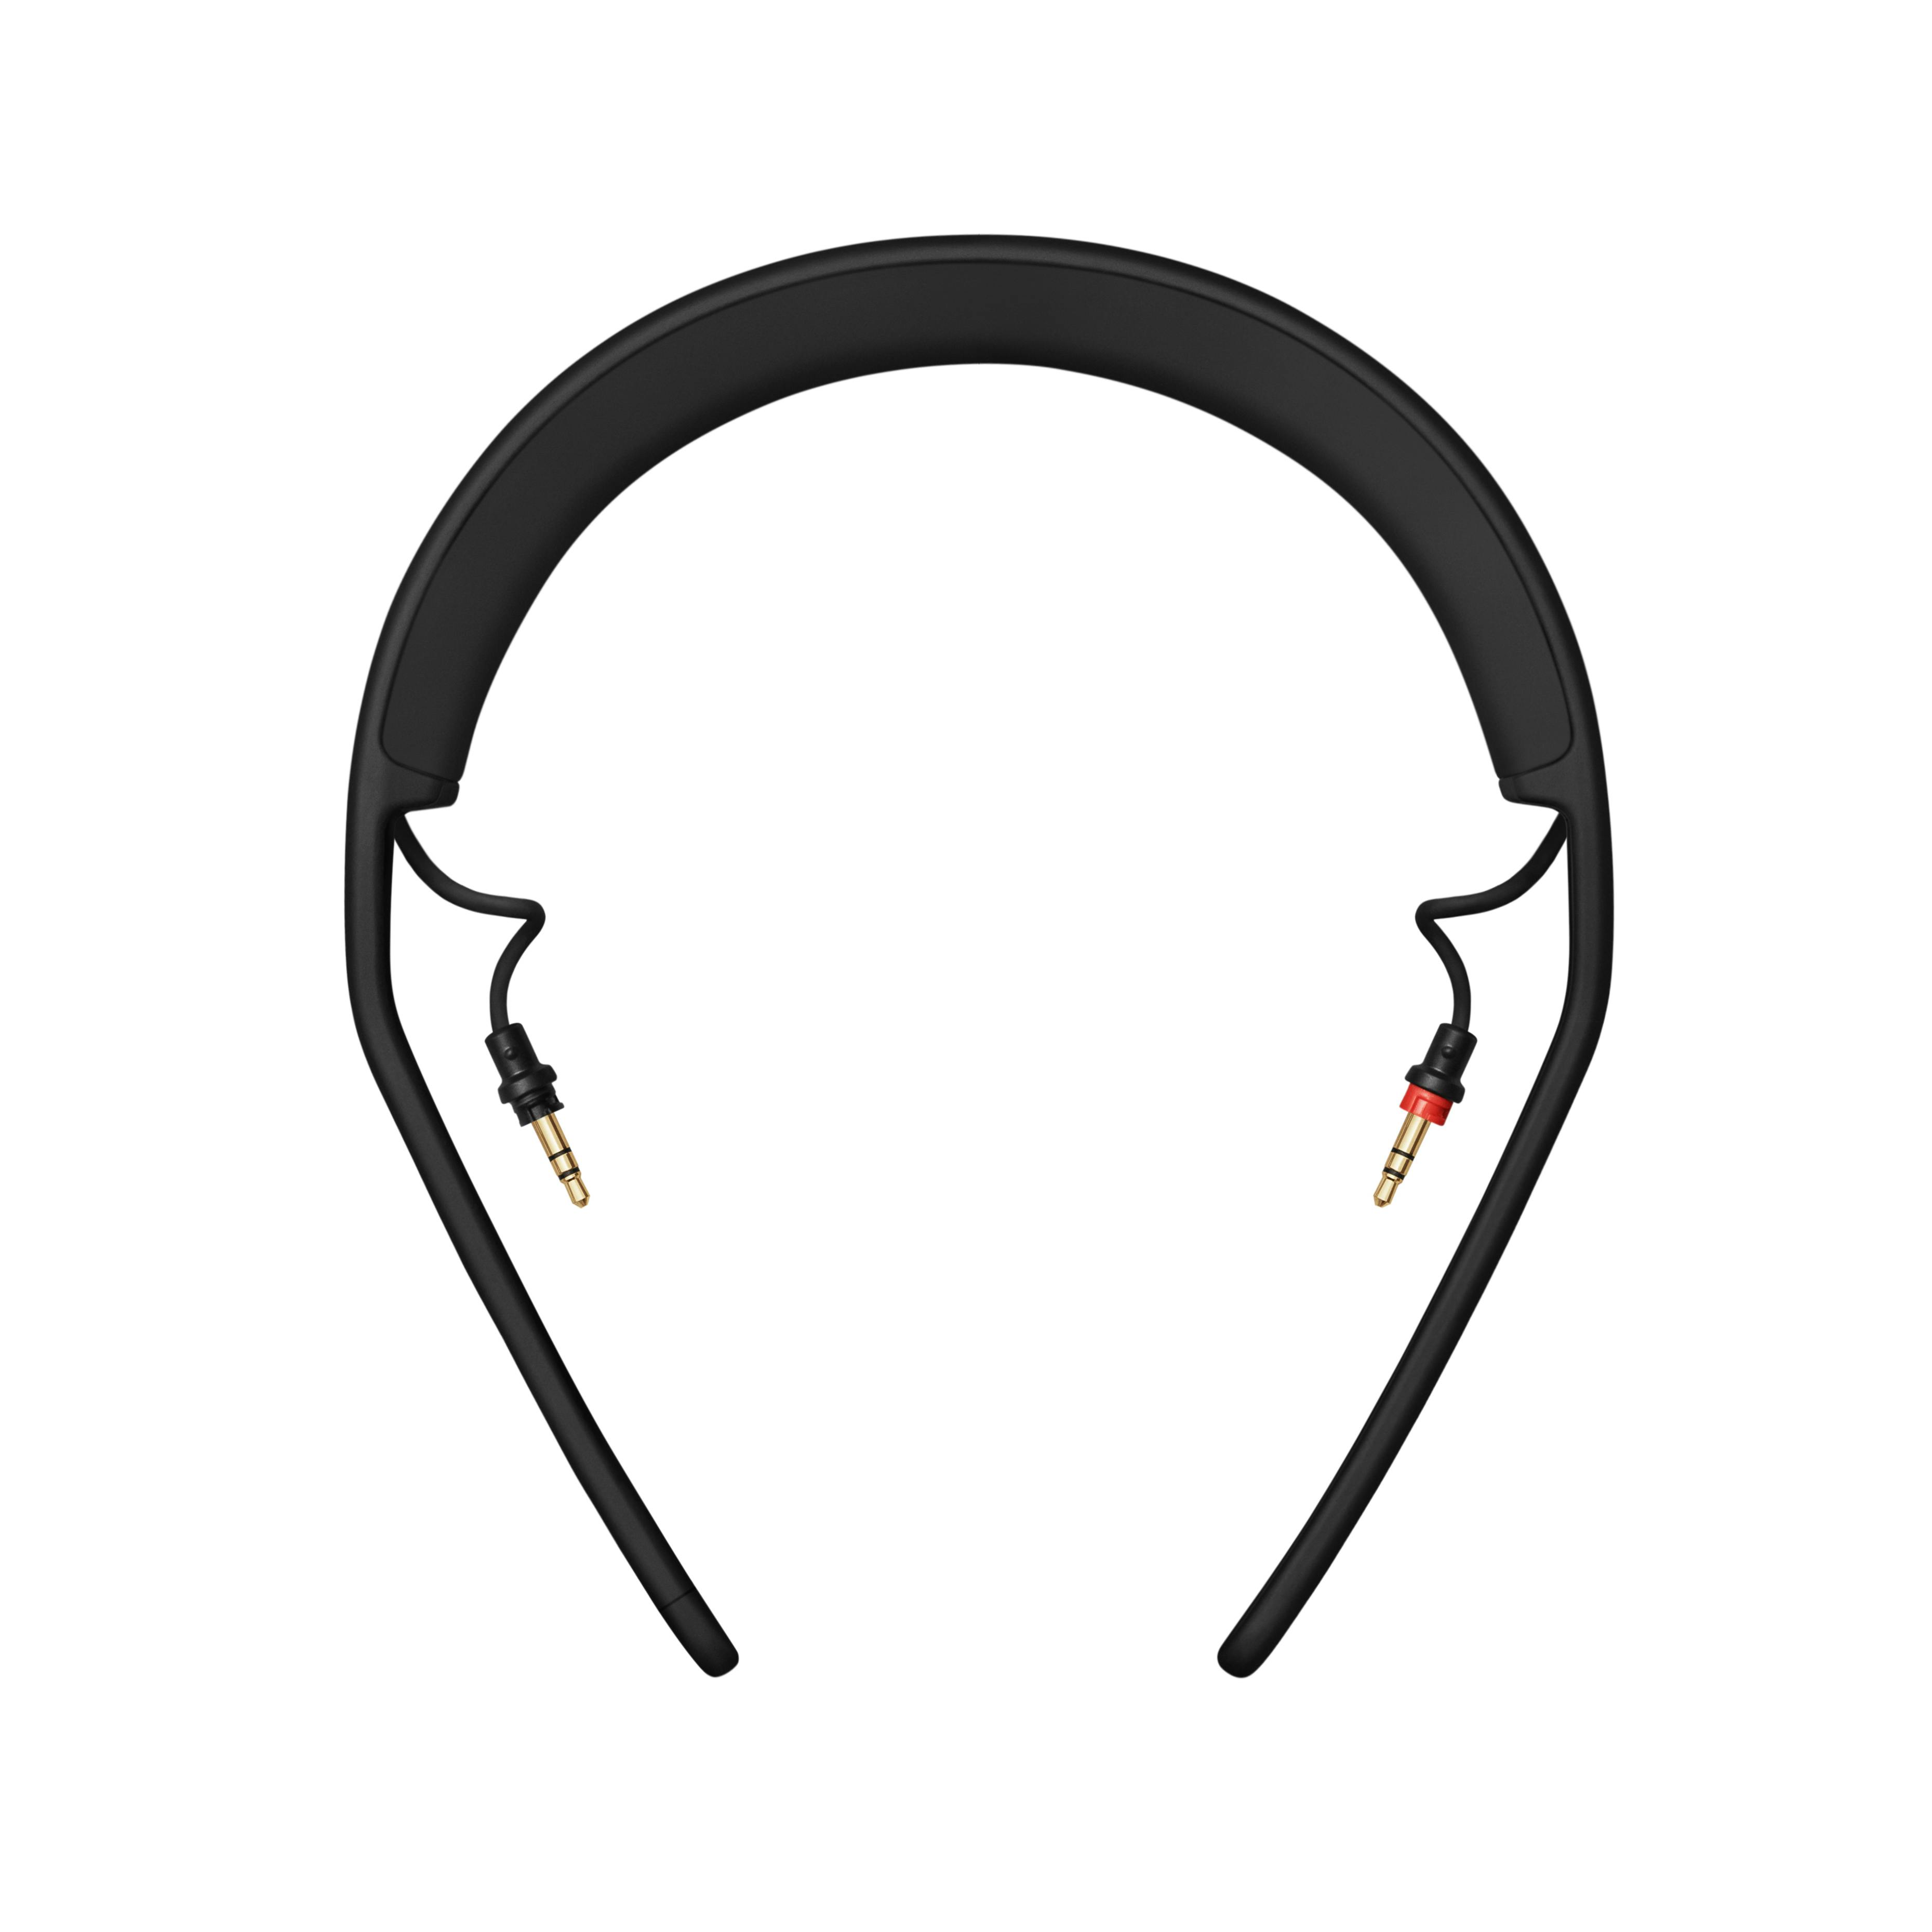 AIAIAI Wireless 2 Preset Over Ear Headphones